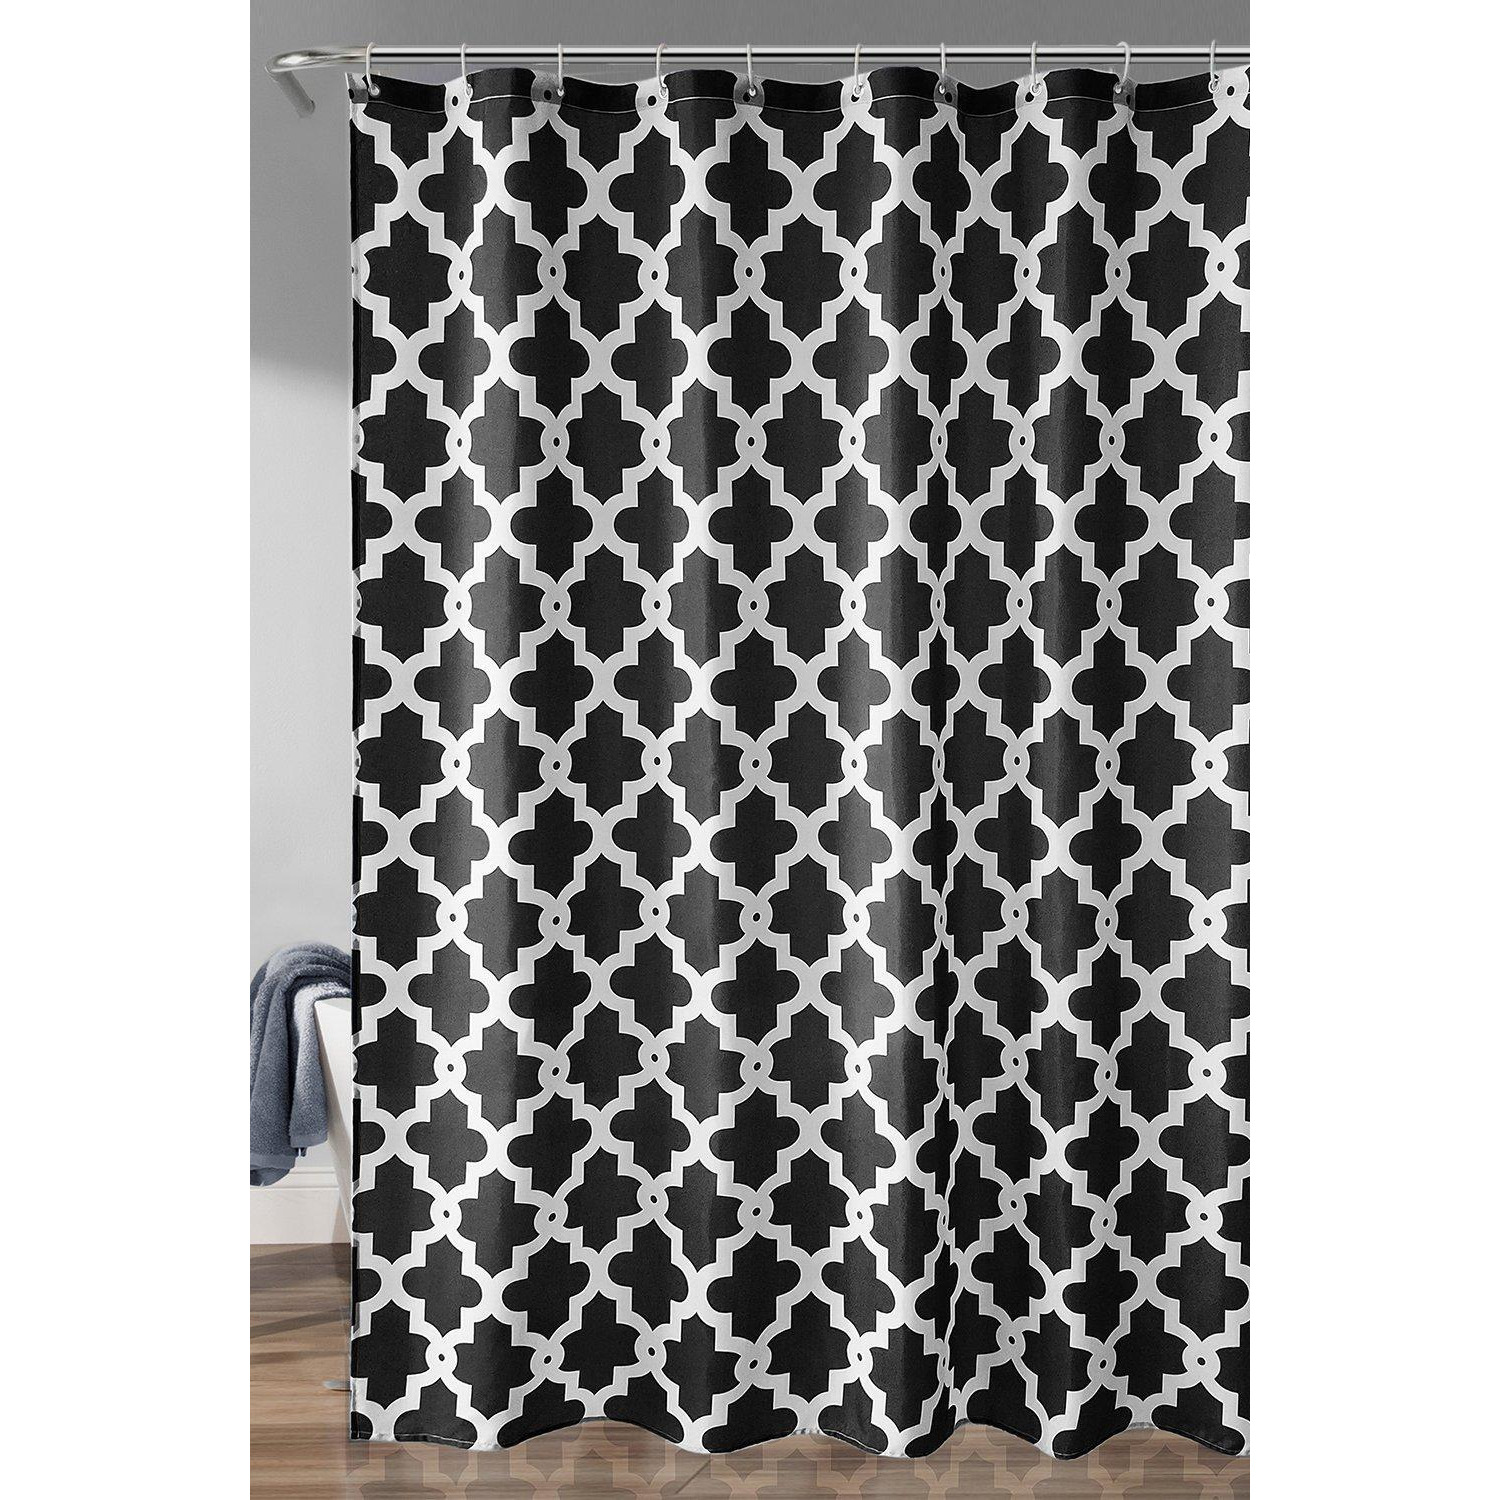 Black Trellis Shower Curtain - 180cm x 180cm - image 1